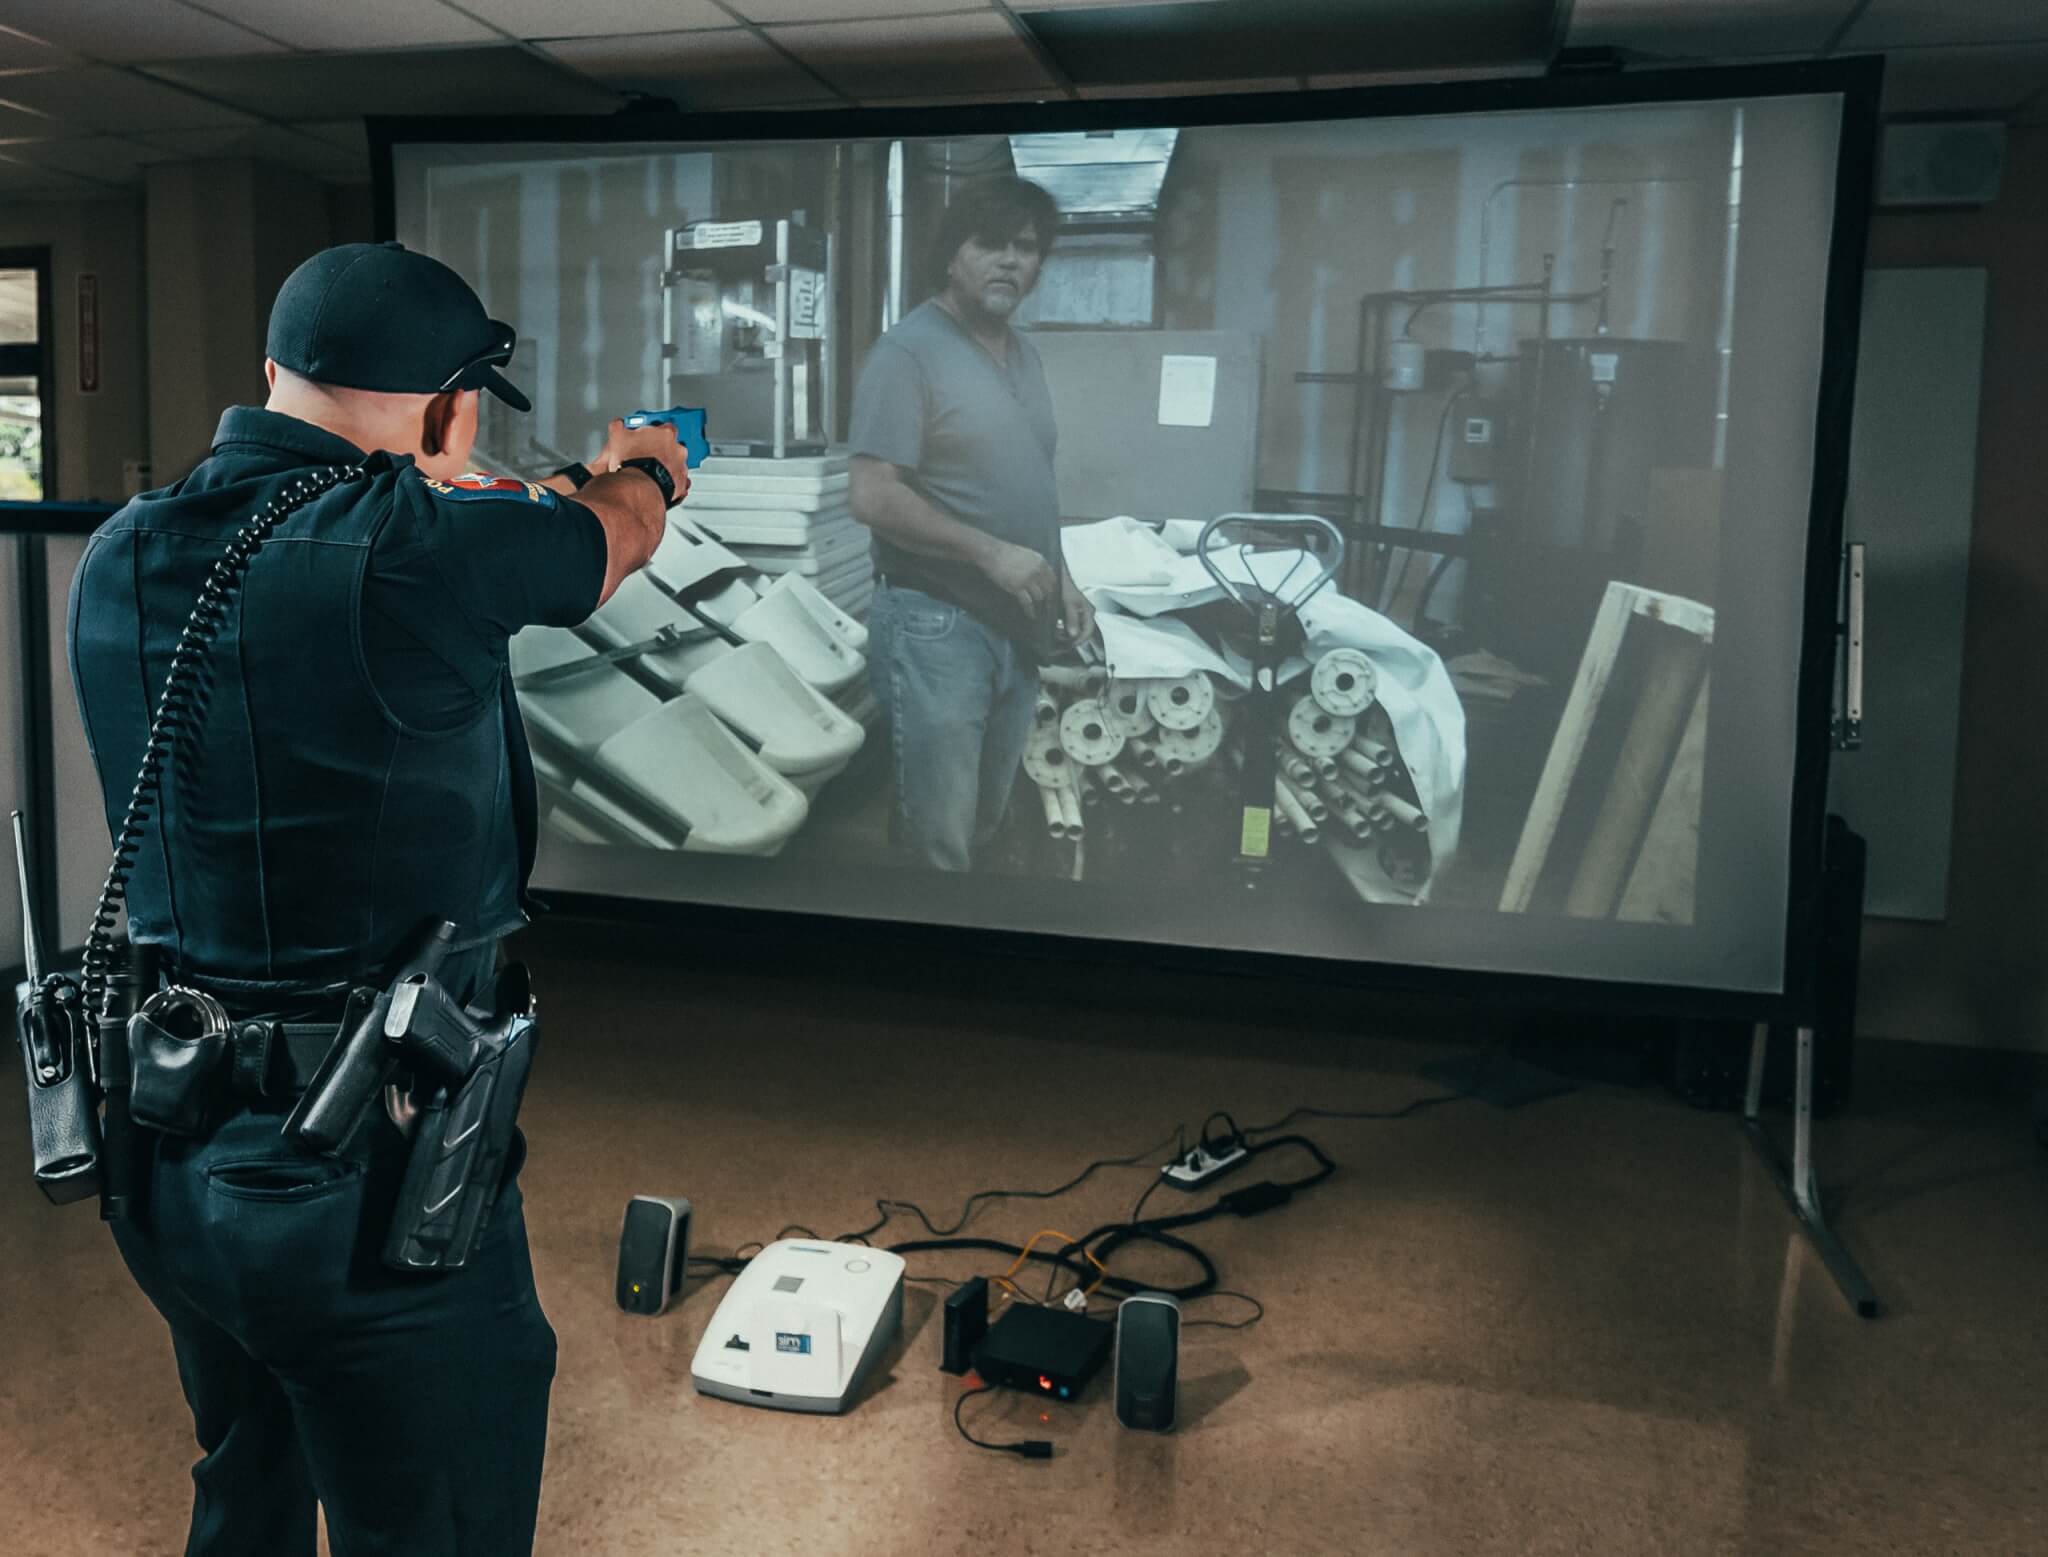 Missouri city, Texas police officer training on a Laser Shot simrange system